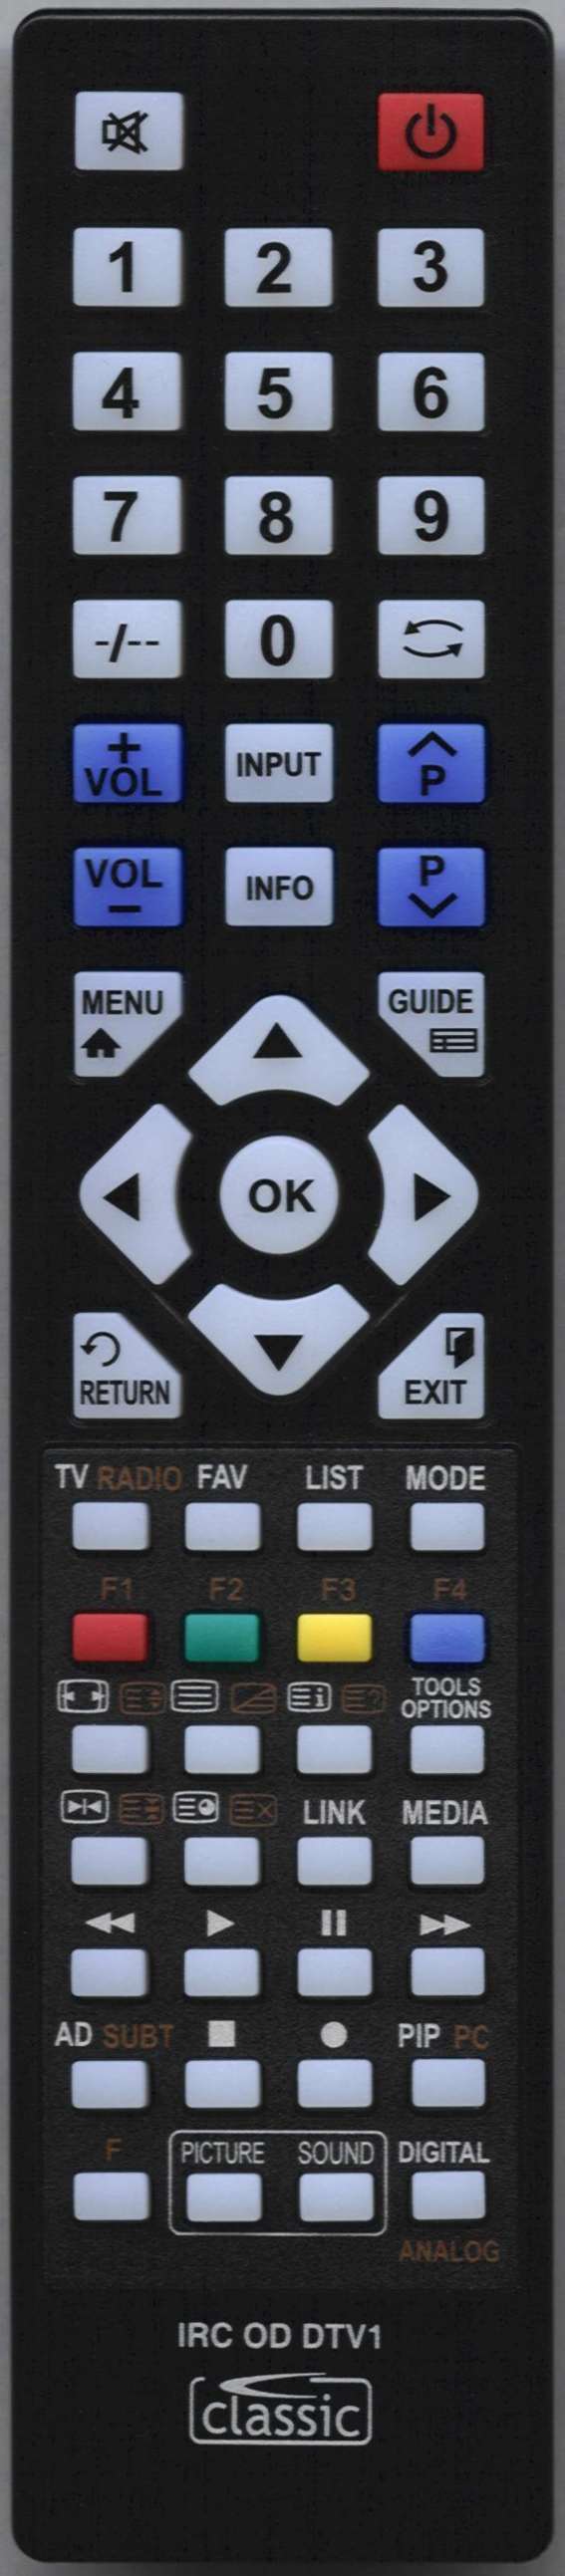 UMC X26/29B-GB-TCD-UK Remote Control Alternative